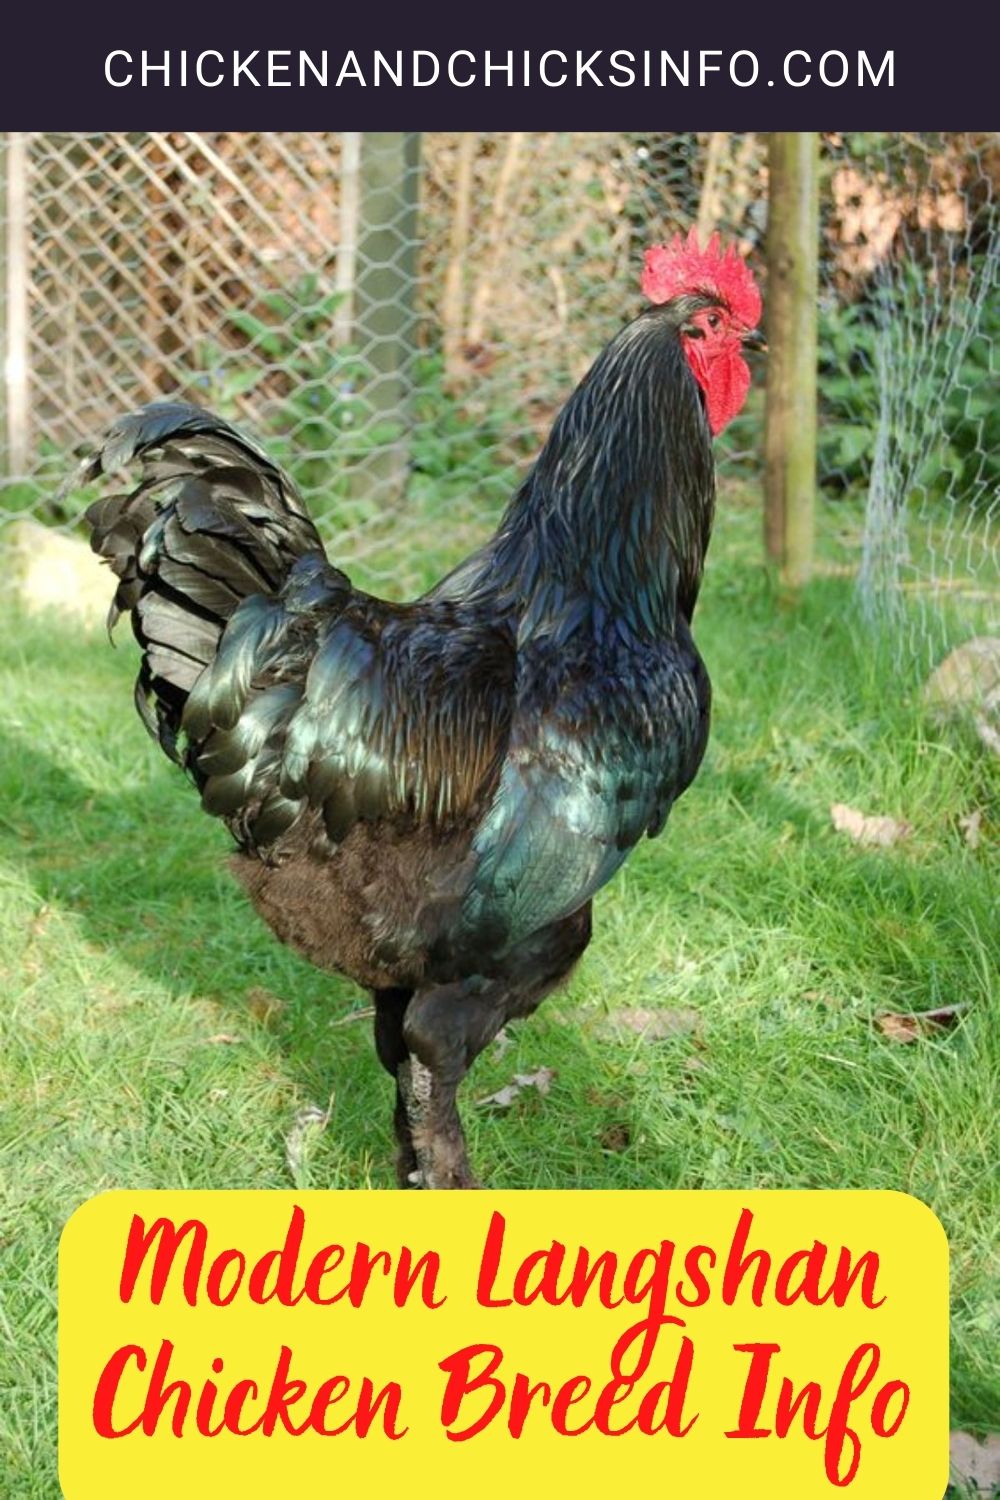 Modern Langshan Chicken Breed Info pinterest image.